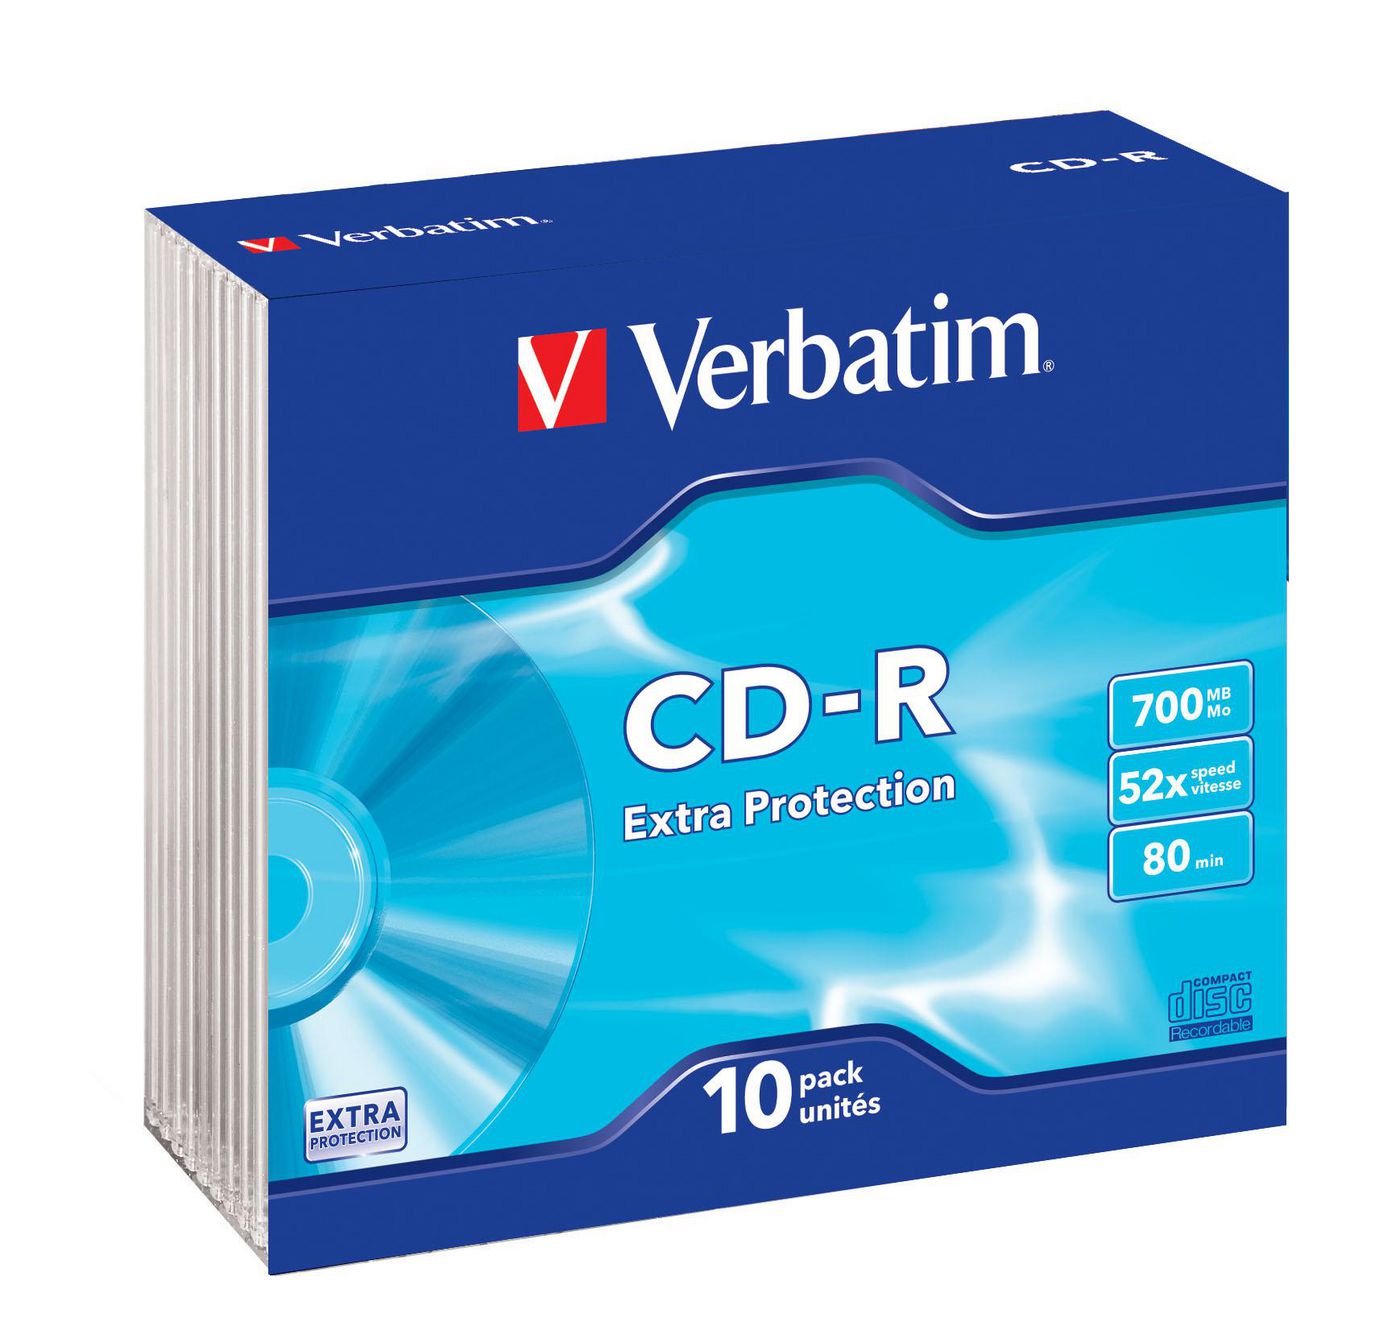 Verbatim CD-R 700MB 80 Minute 52x DataLife Extra Protection Slim Case (Pack of 10) 43415